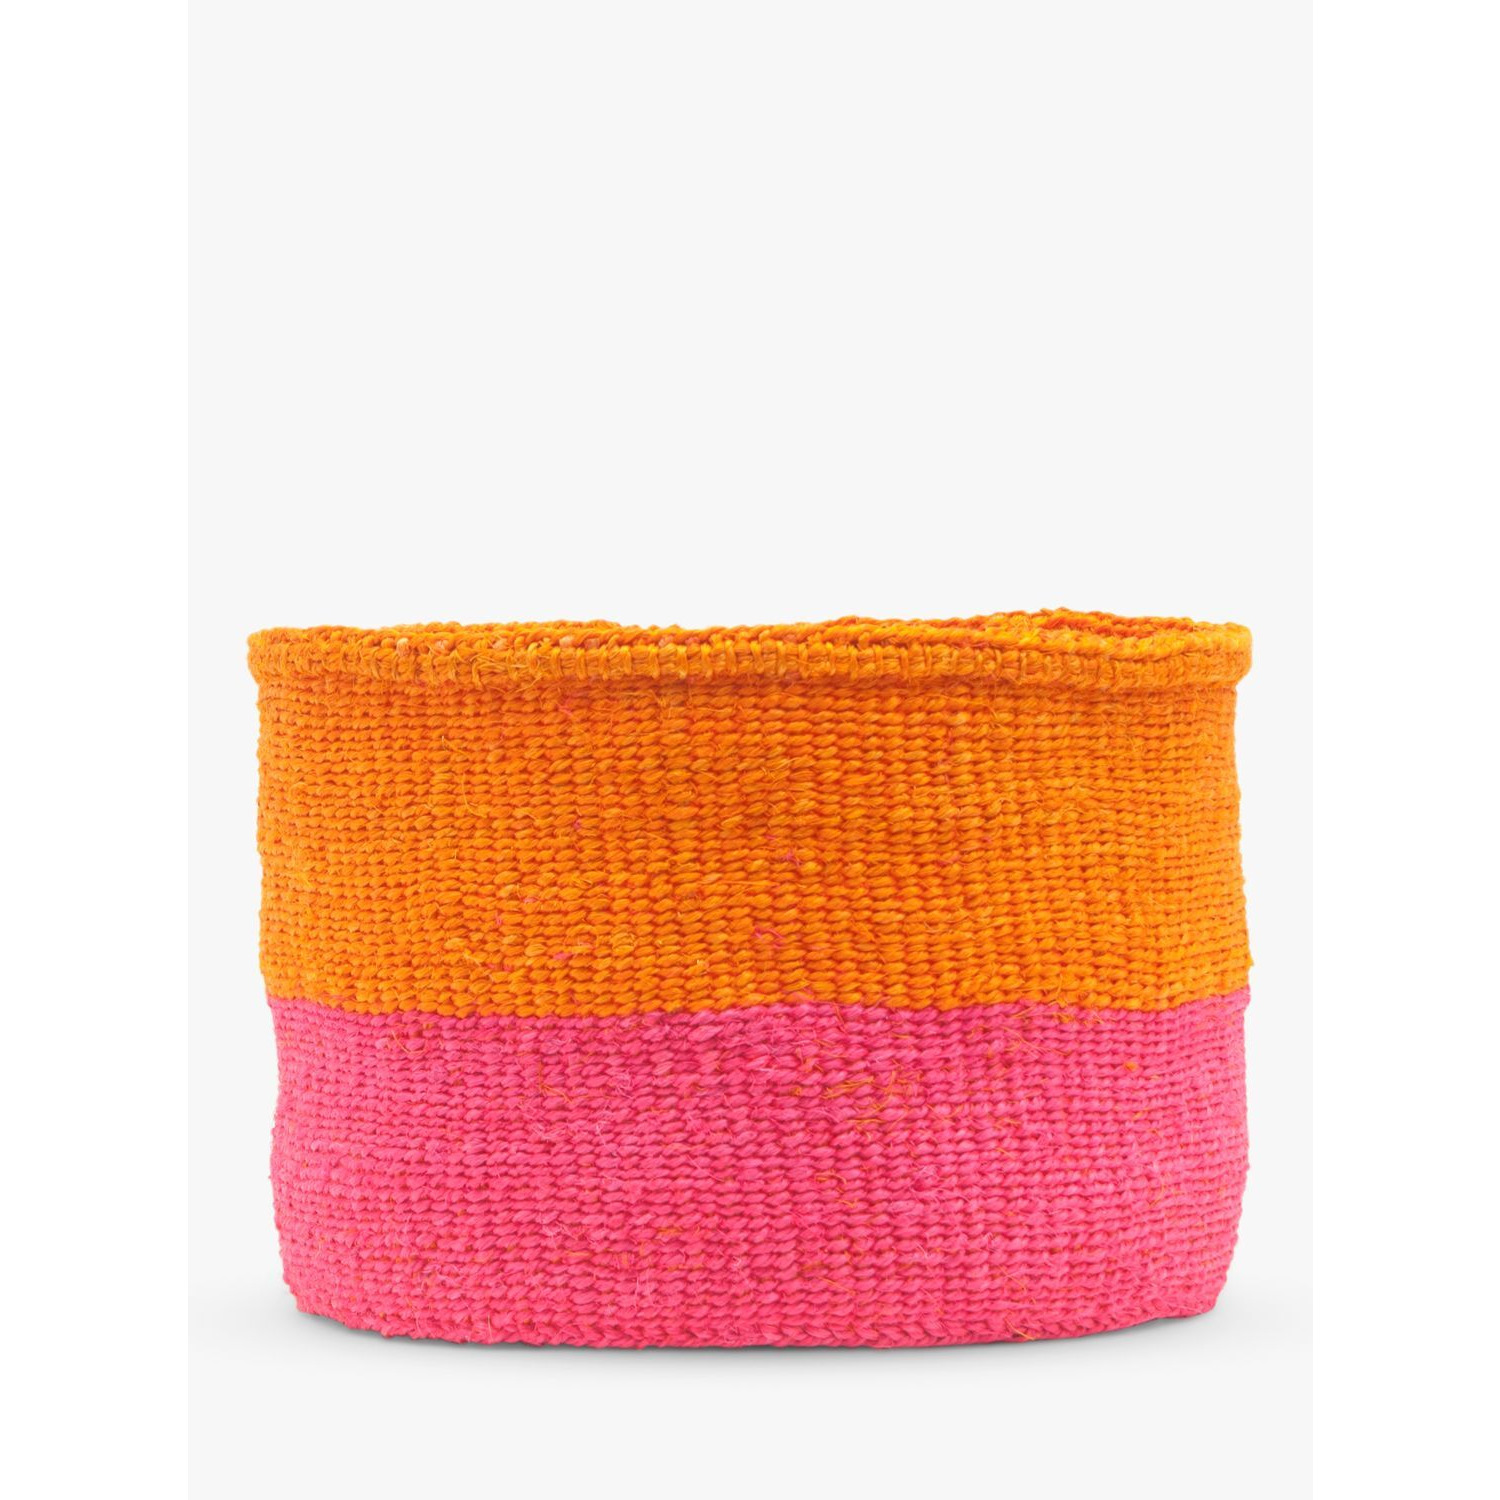 The Basket Room Kali Woven Storage Basket, Orange/Pink, Small - image 1